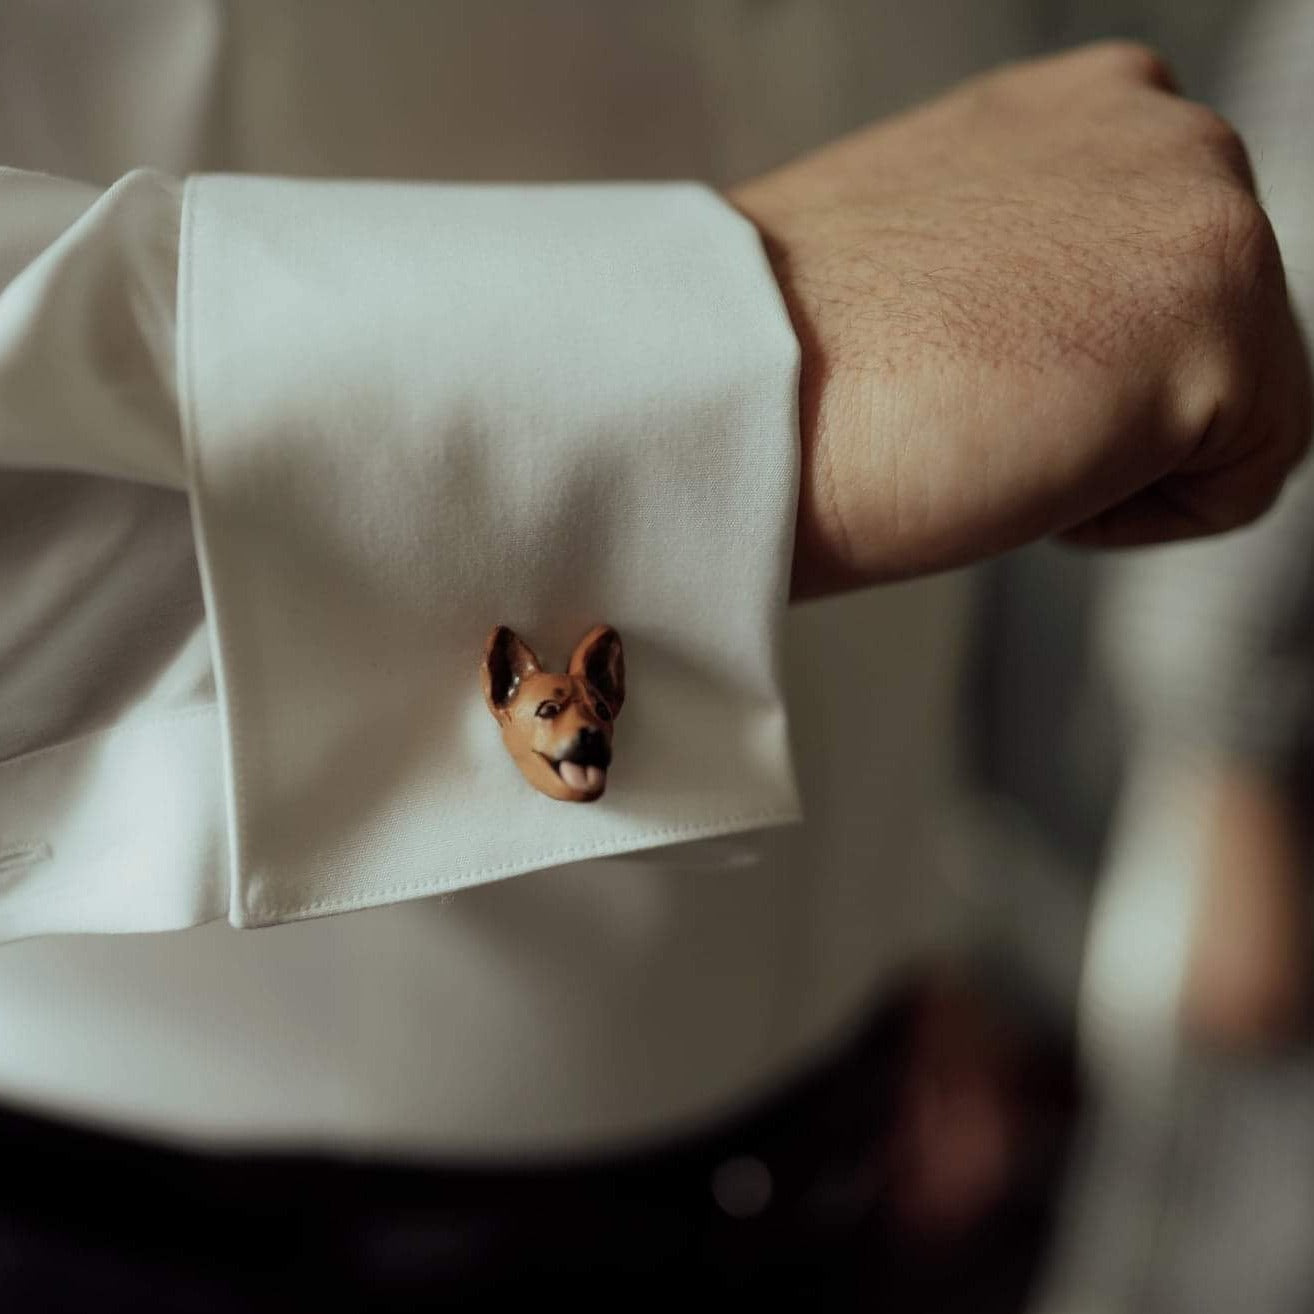 Custom dog cufflinks shown being worn at a wedding